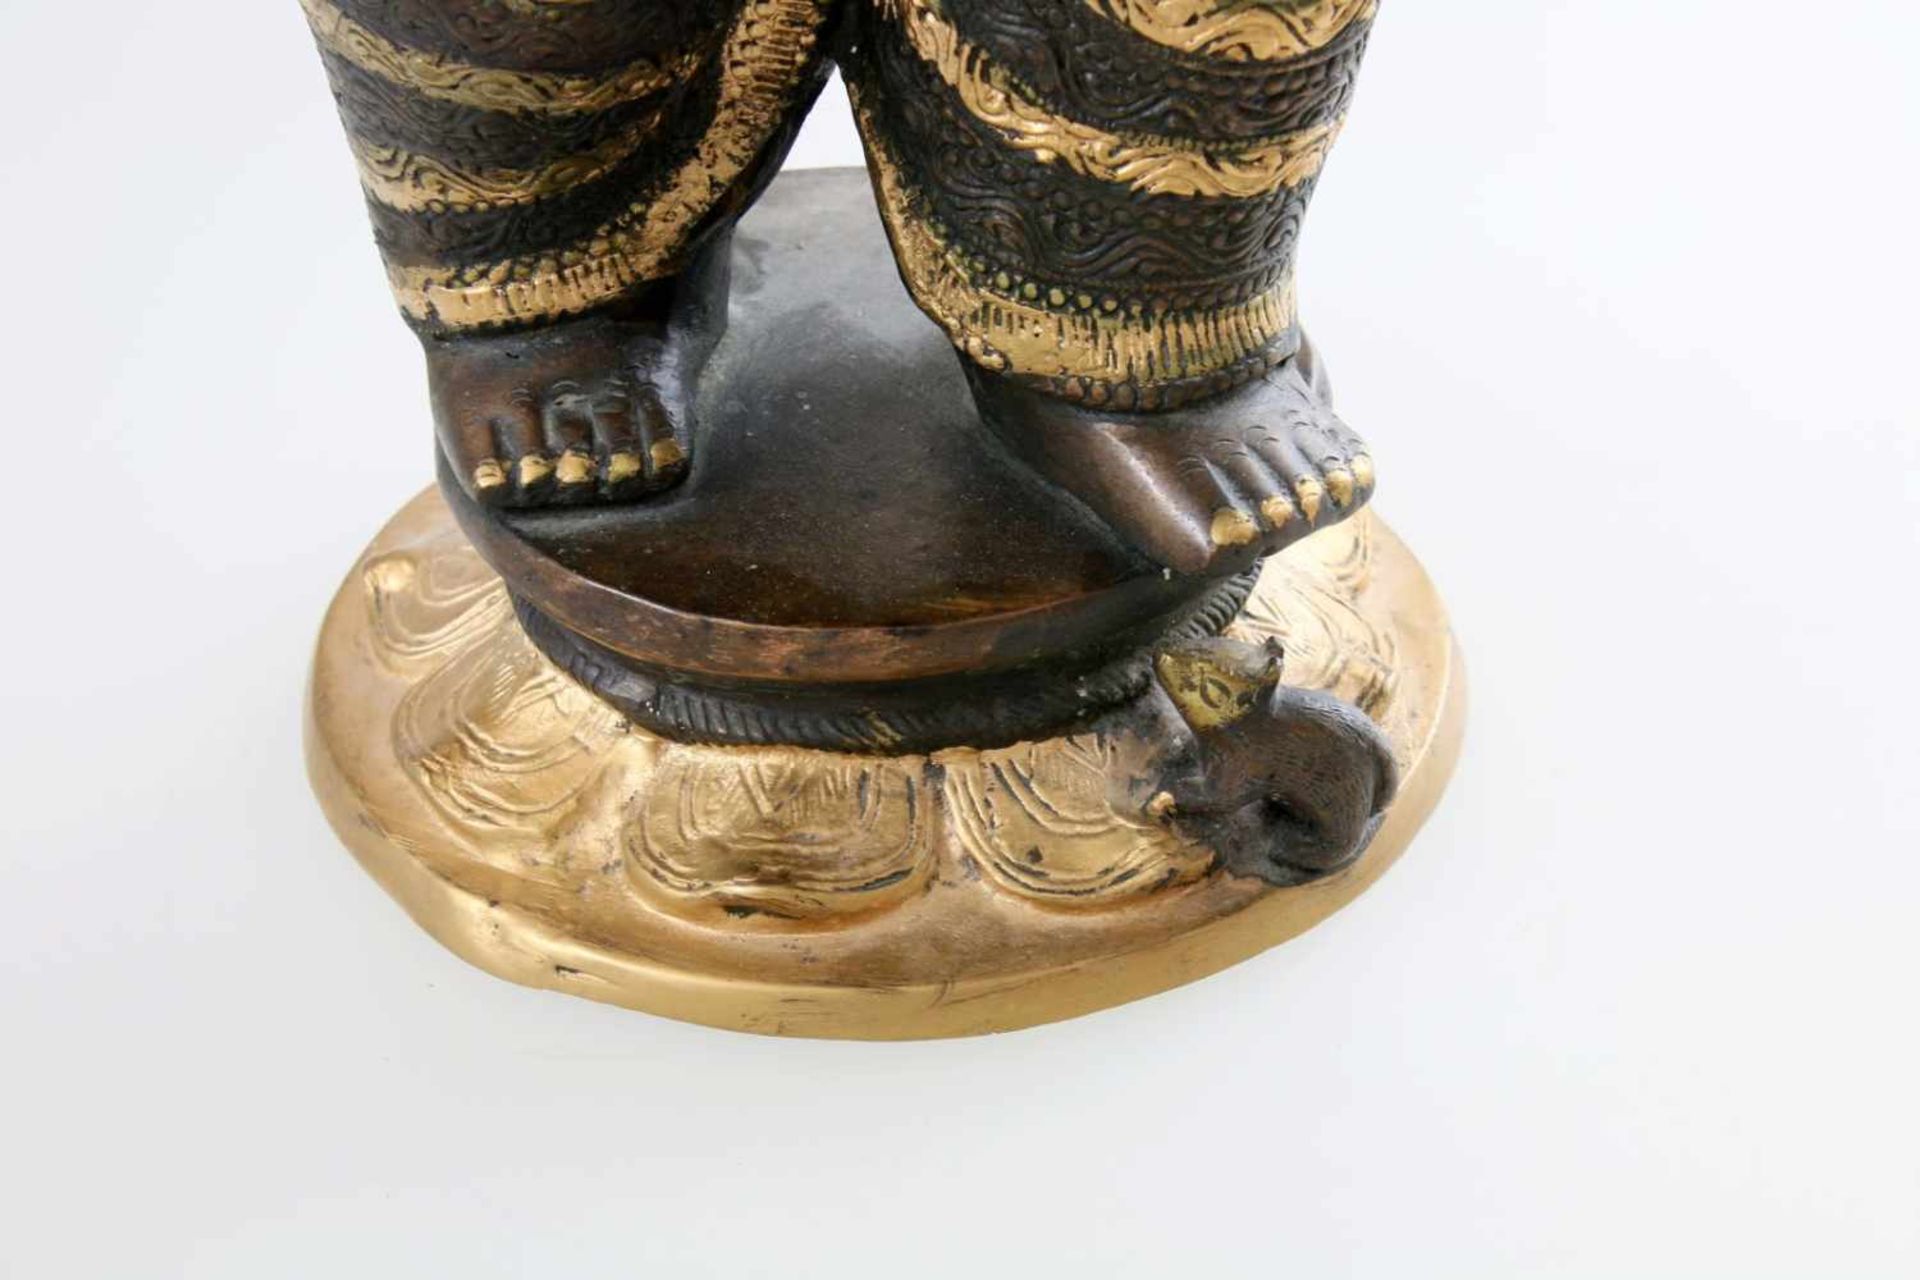 Ganesha mit Schirm - Nordindien In der rechten Schirm, in der linken Hand Teegefäß haltend, - Image 6 of 6